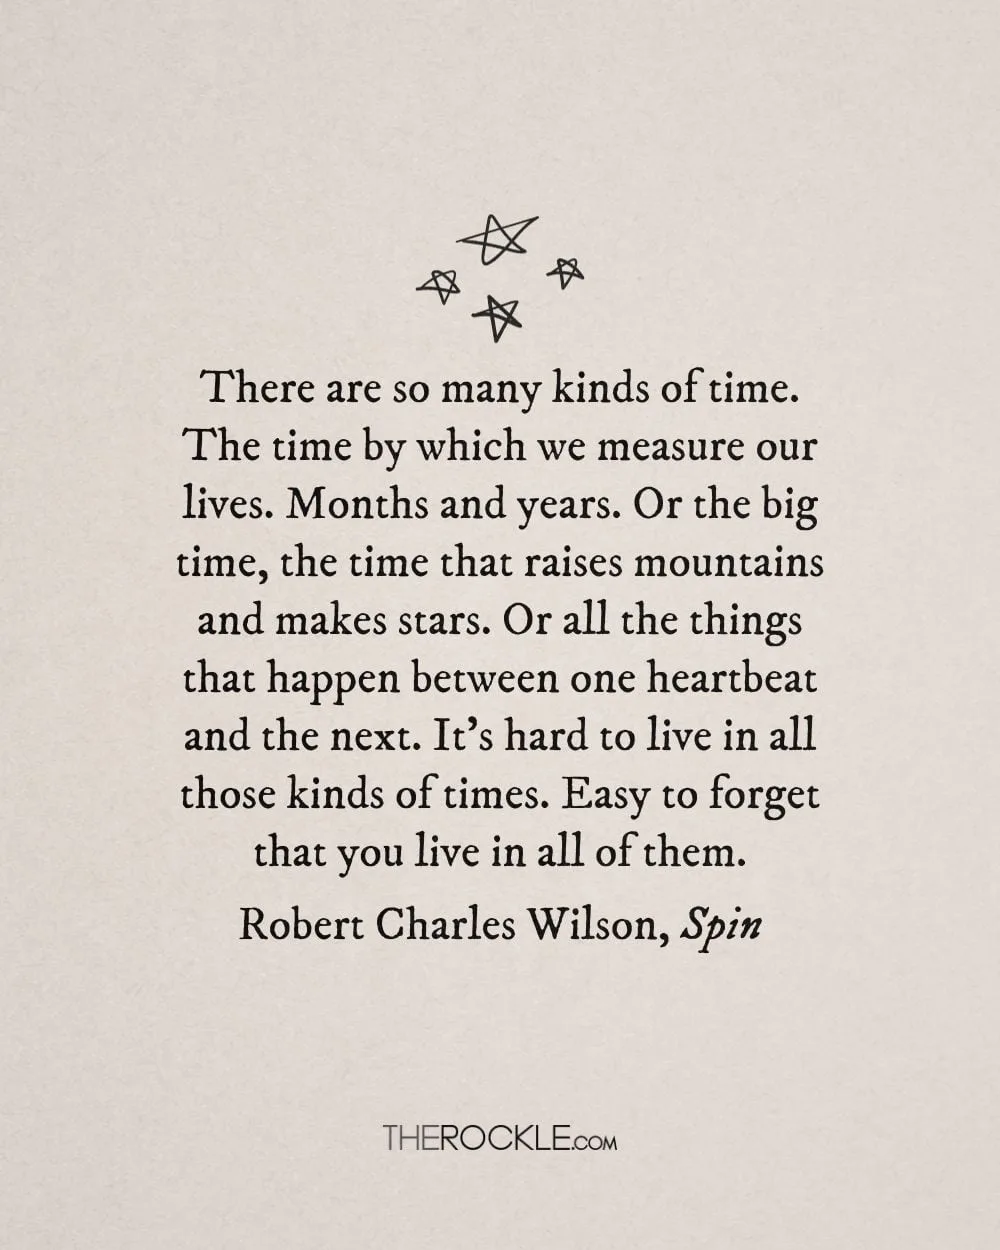 Robert Charles Wilson book quote